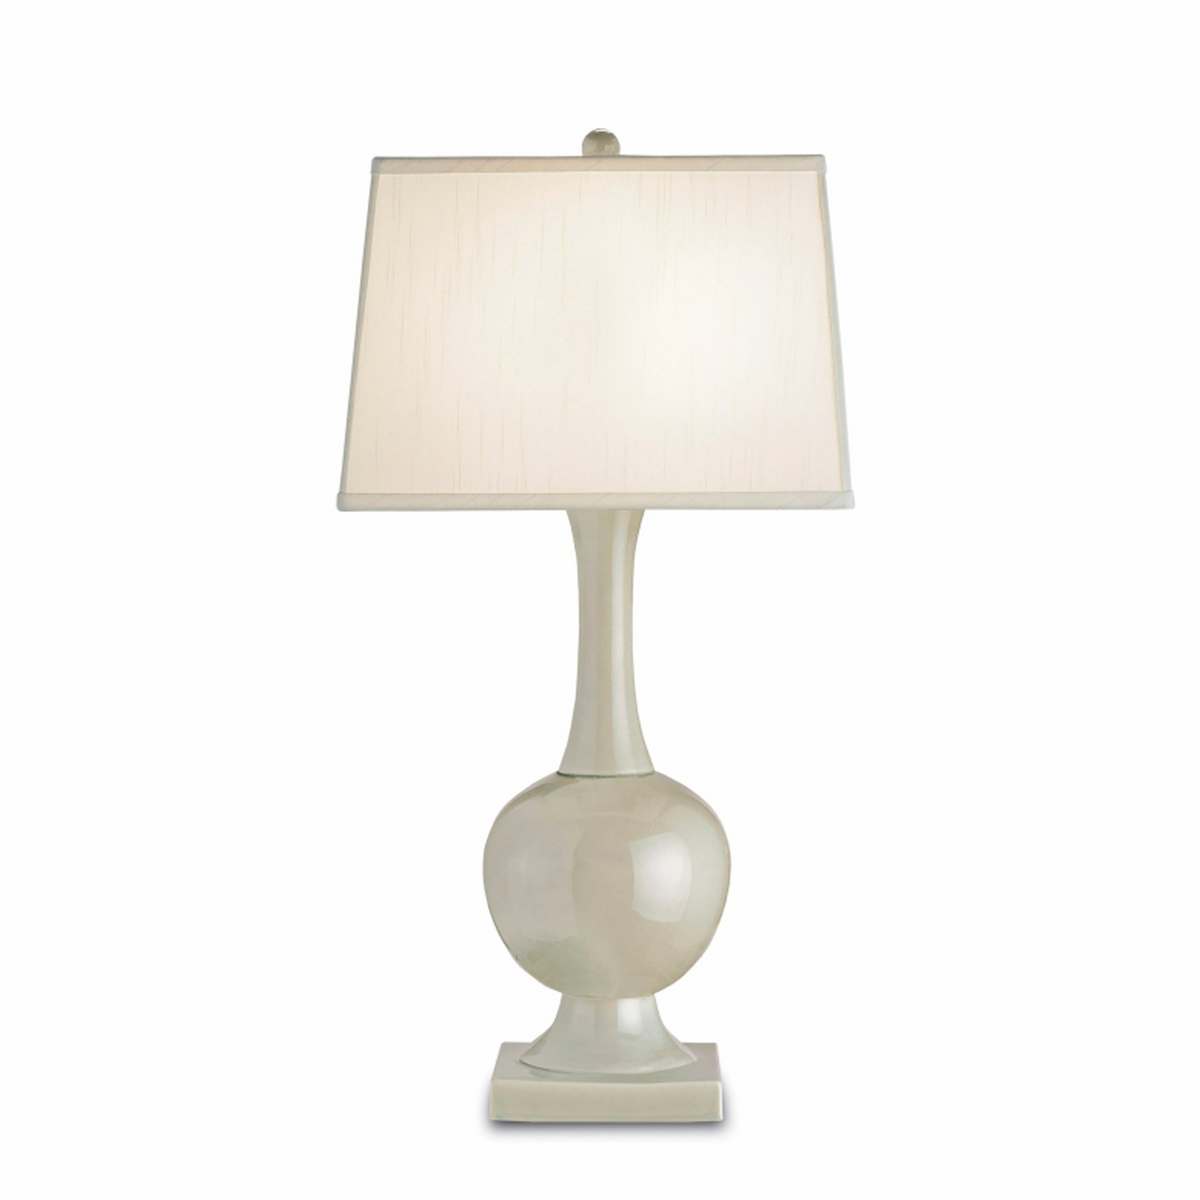 Downton Table Lamp